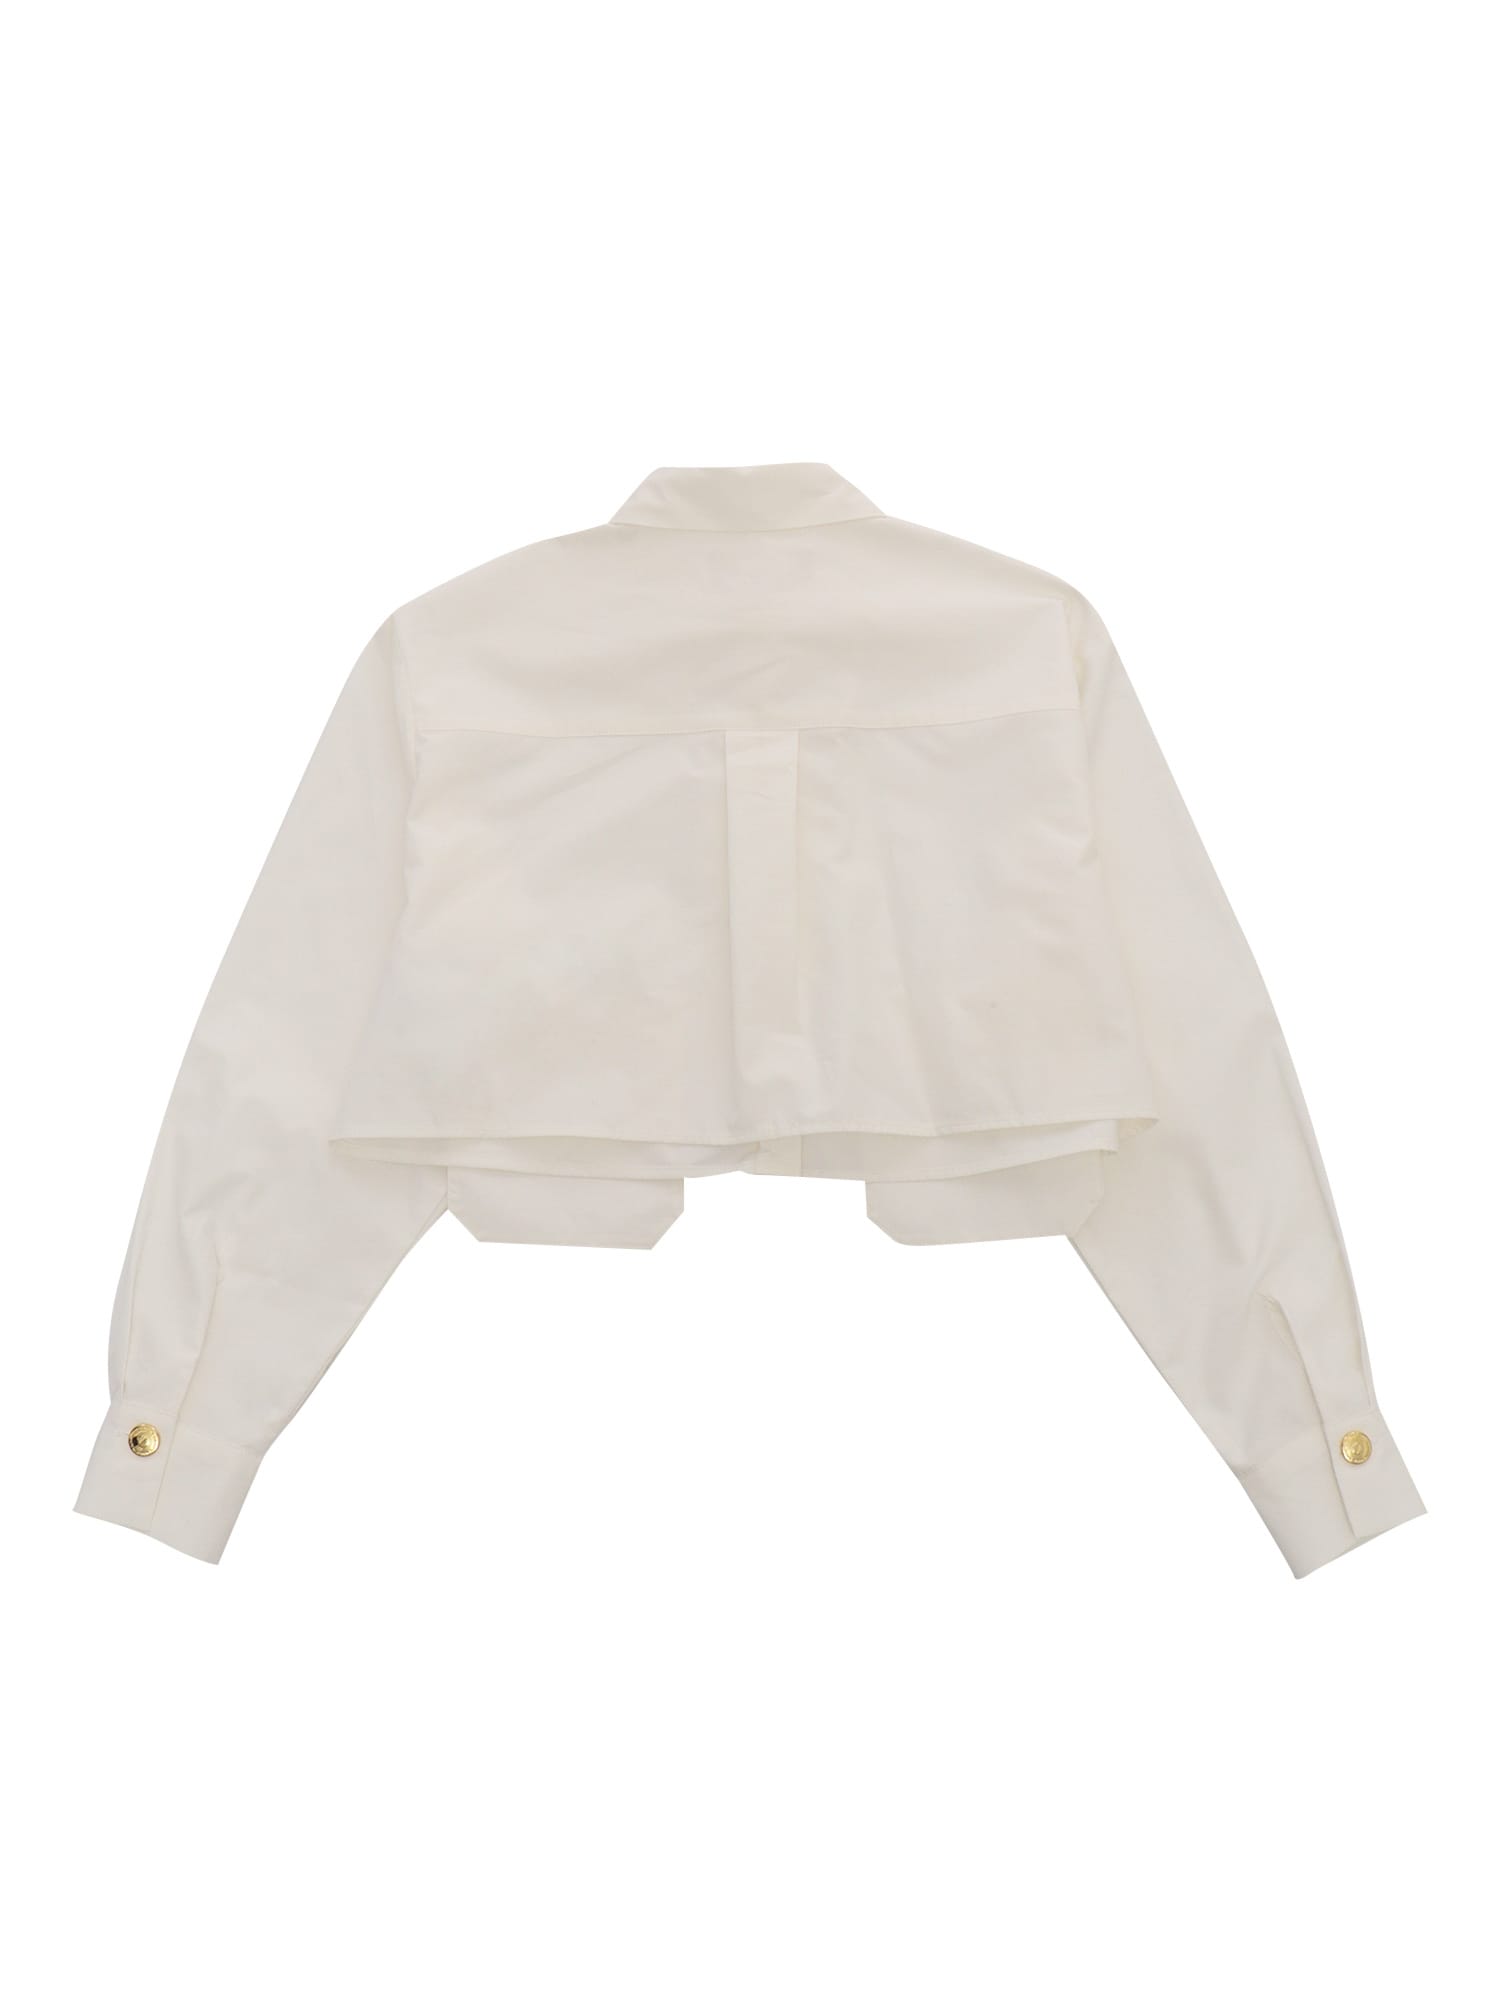 Shop Elisabetta Franchi La Mia Bambina White Cropped Shirt